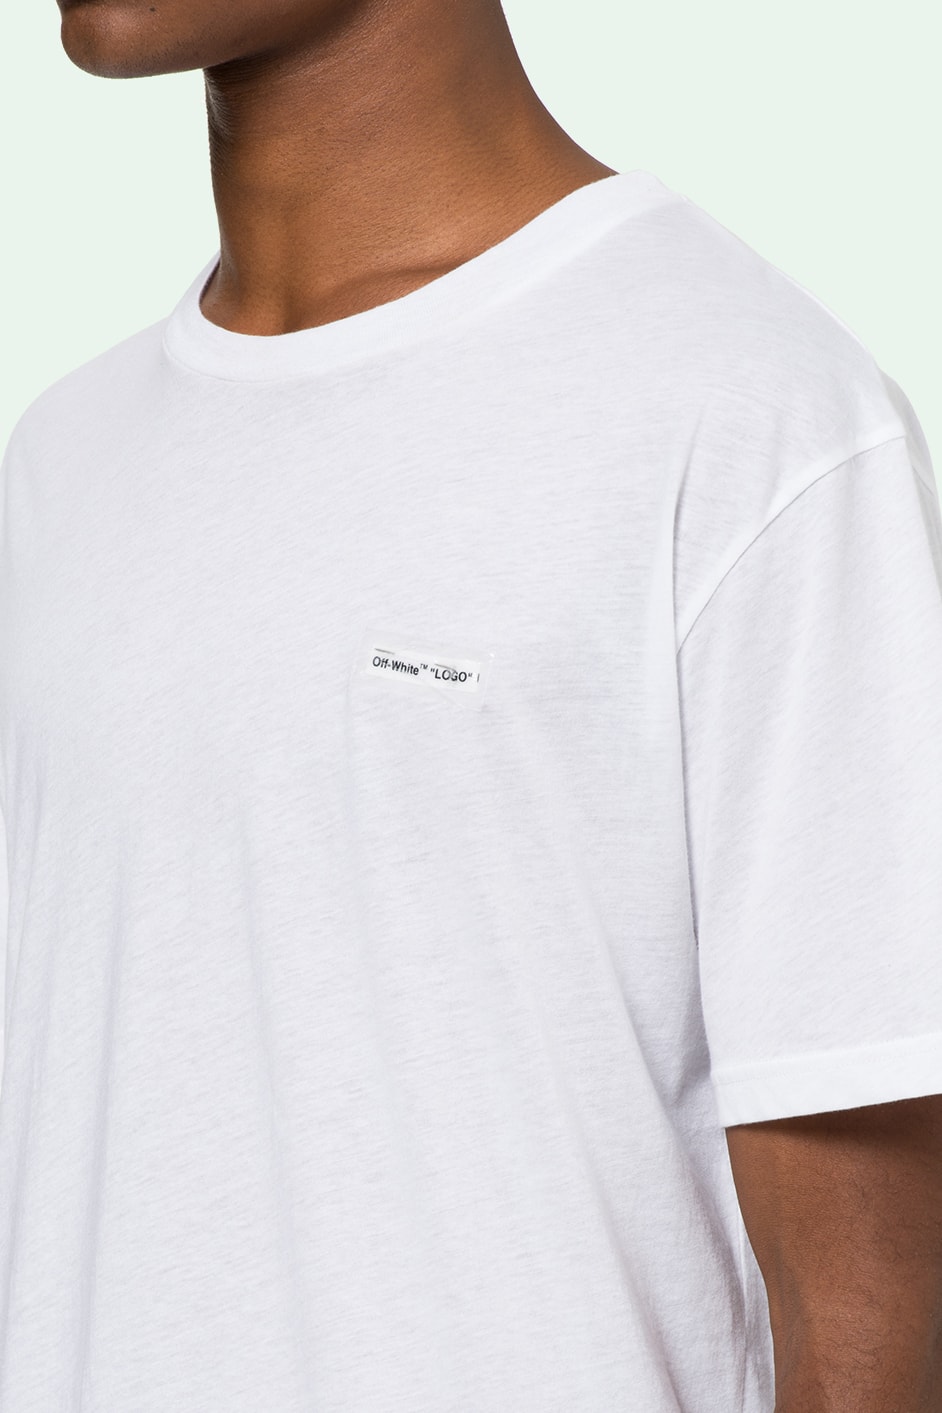 Off-White™ Releases $500 USD Basic T-Shirt Pack | Hypebeast